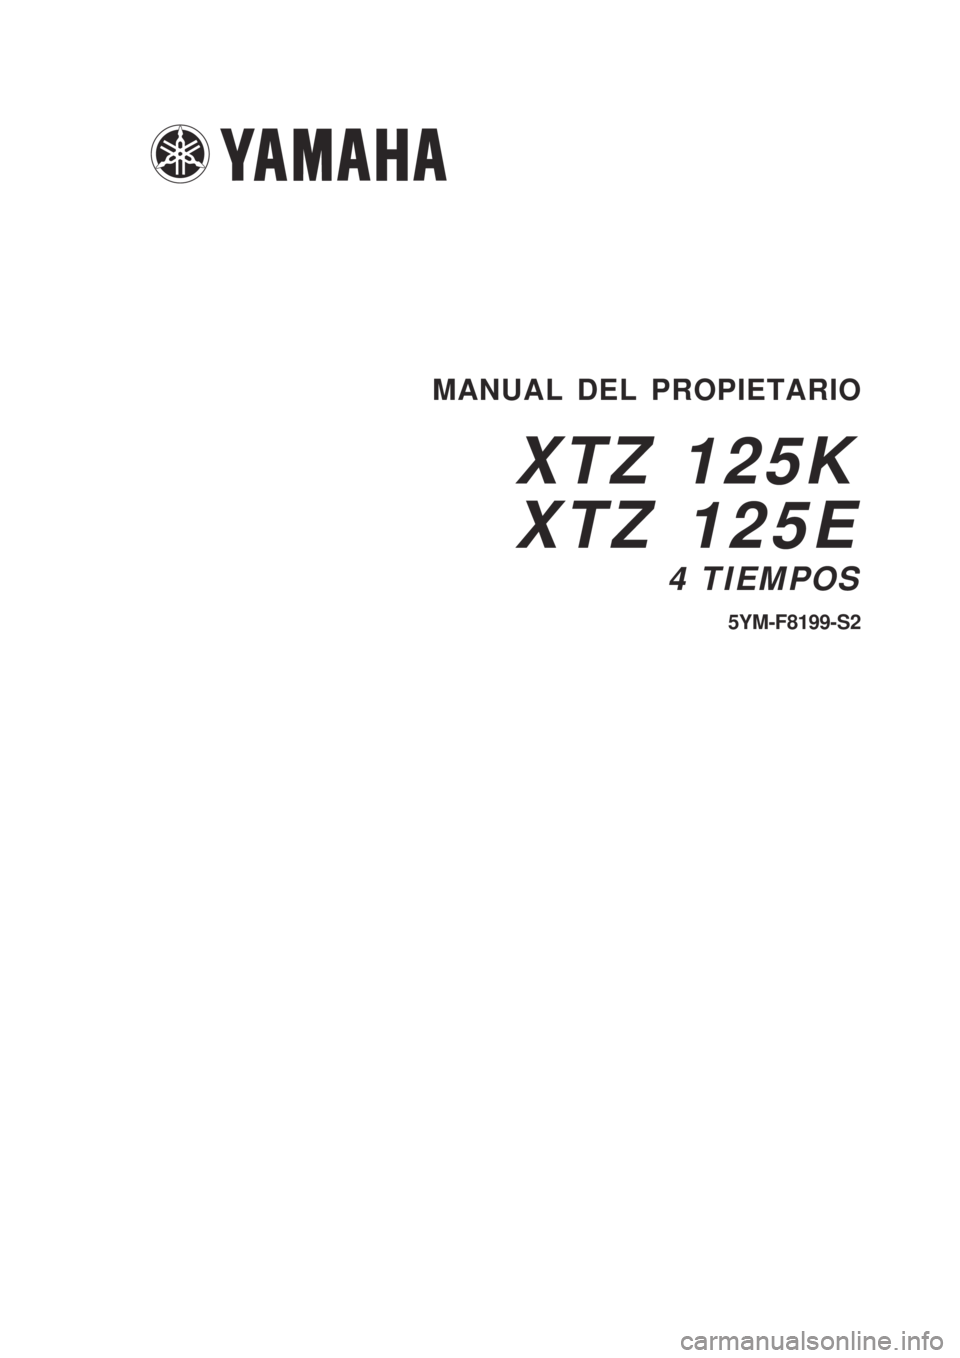 YAMAHA XTZ125 2007  Manuale de Empleo (in Spanish) I
I5YM-F8199-S2
4 TIEMPOS
MANUAL DEL PROPIETARIO
XTZ 125K
XTZ 125E
5YM-F8199-S1
4 TIEMPOS
MANUAL DEL PROPIETARIO
XTZ 125K
XTZ 125E 